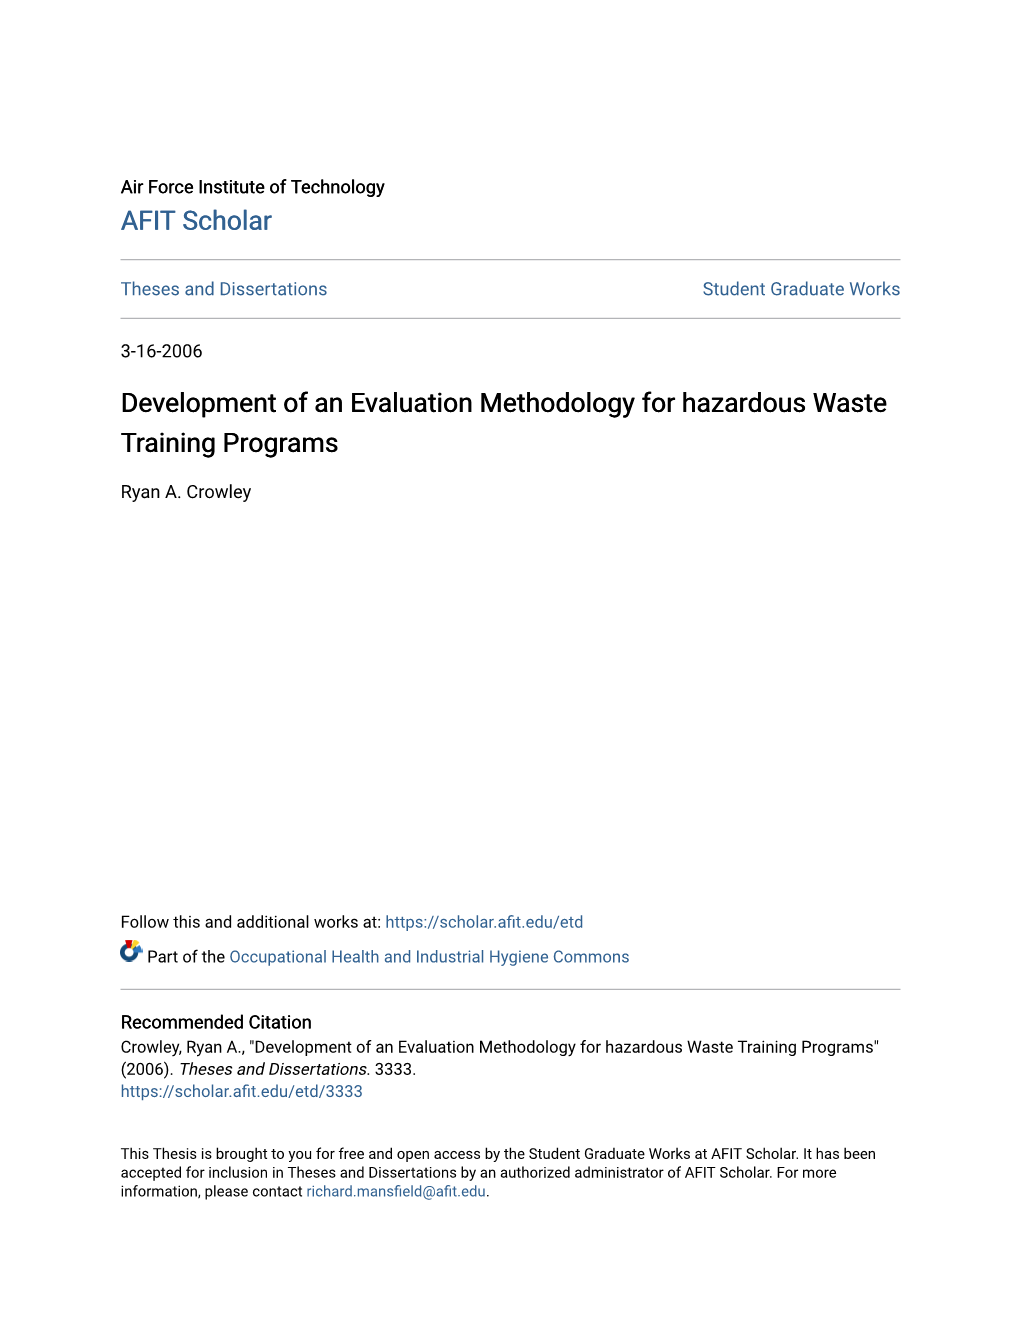 Development of an Evaluation Methodology for Hazardous Waste Training Programs